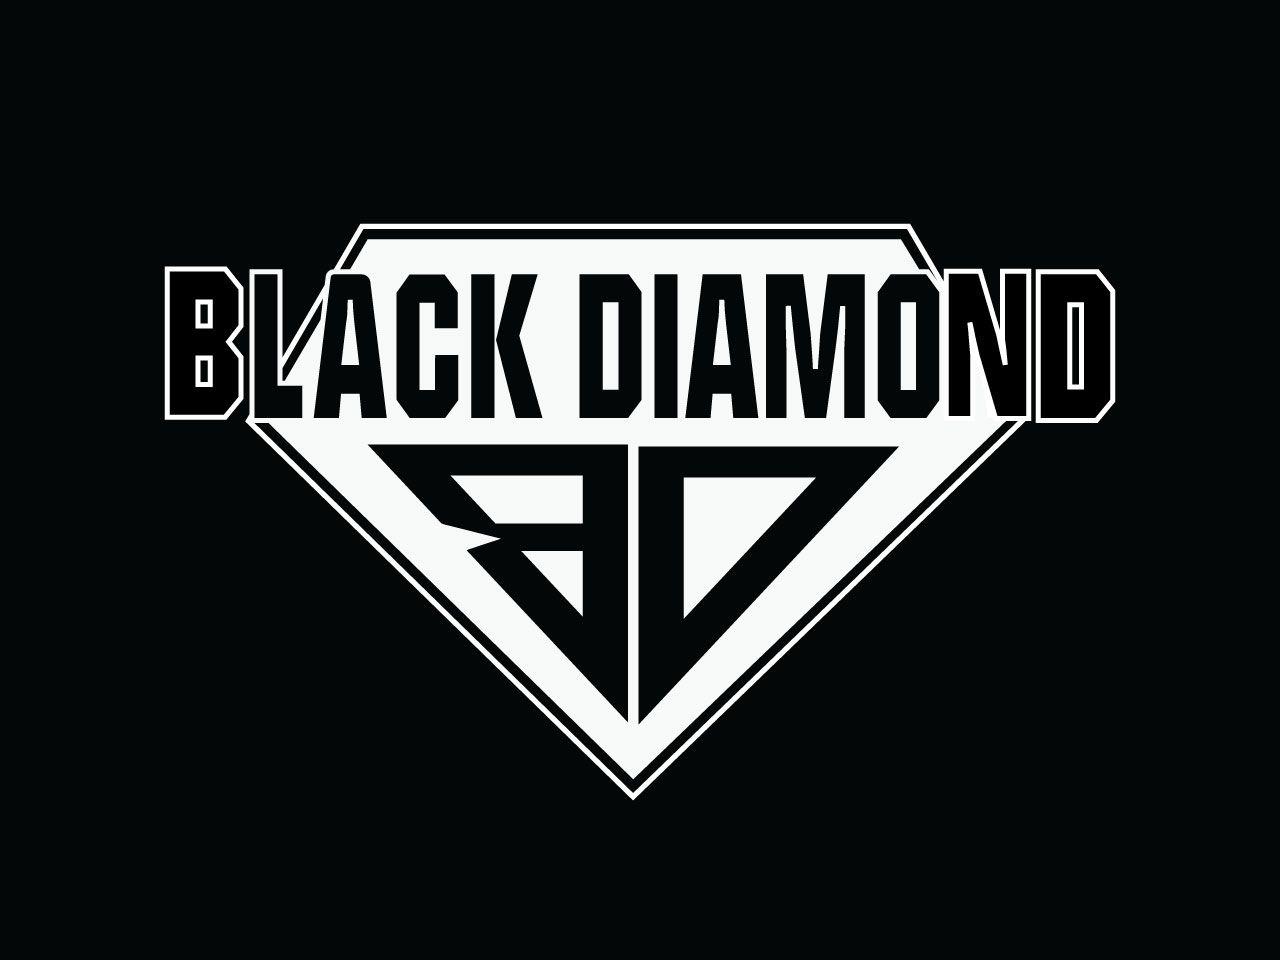 Black and White Diamond Clothing Logo - Black Diamond clothing store logo by Afzal uz zaman Shaju | Dribbble ...